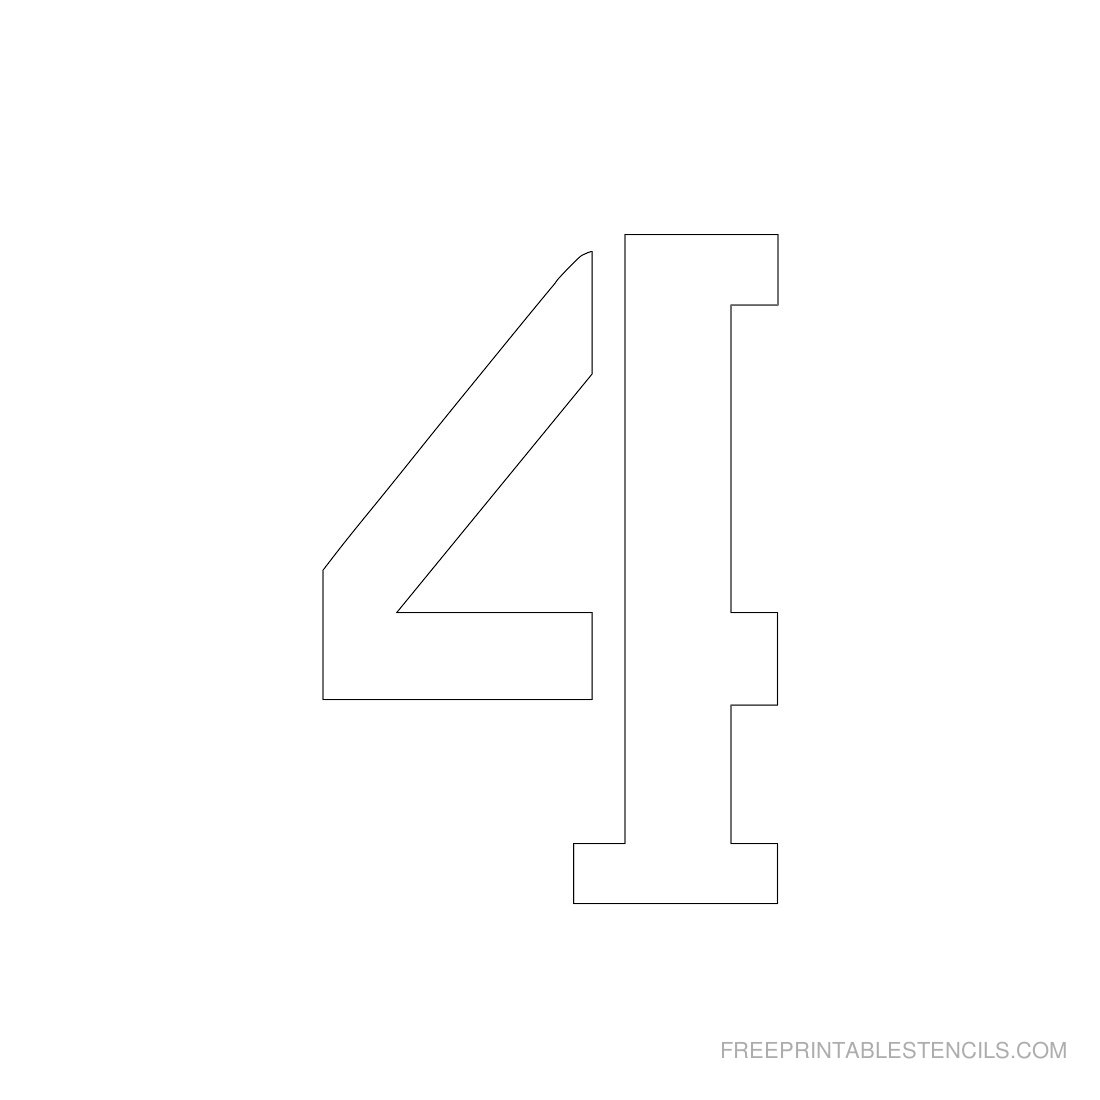 Printable 3 Inch Number Stencils 1-10 | Free Printable Stencils - Free Printable 3 Inch Number Stencils